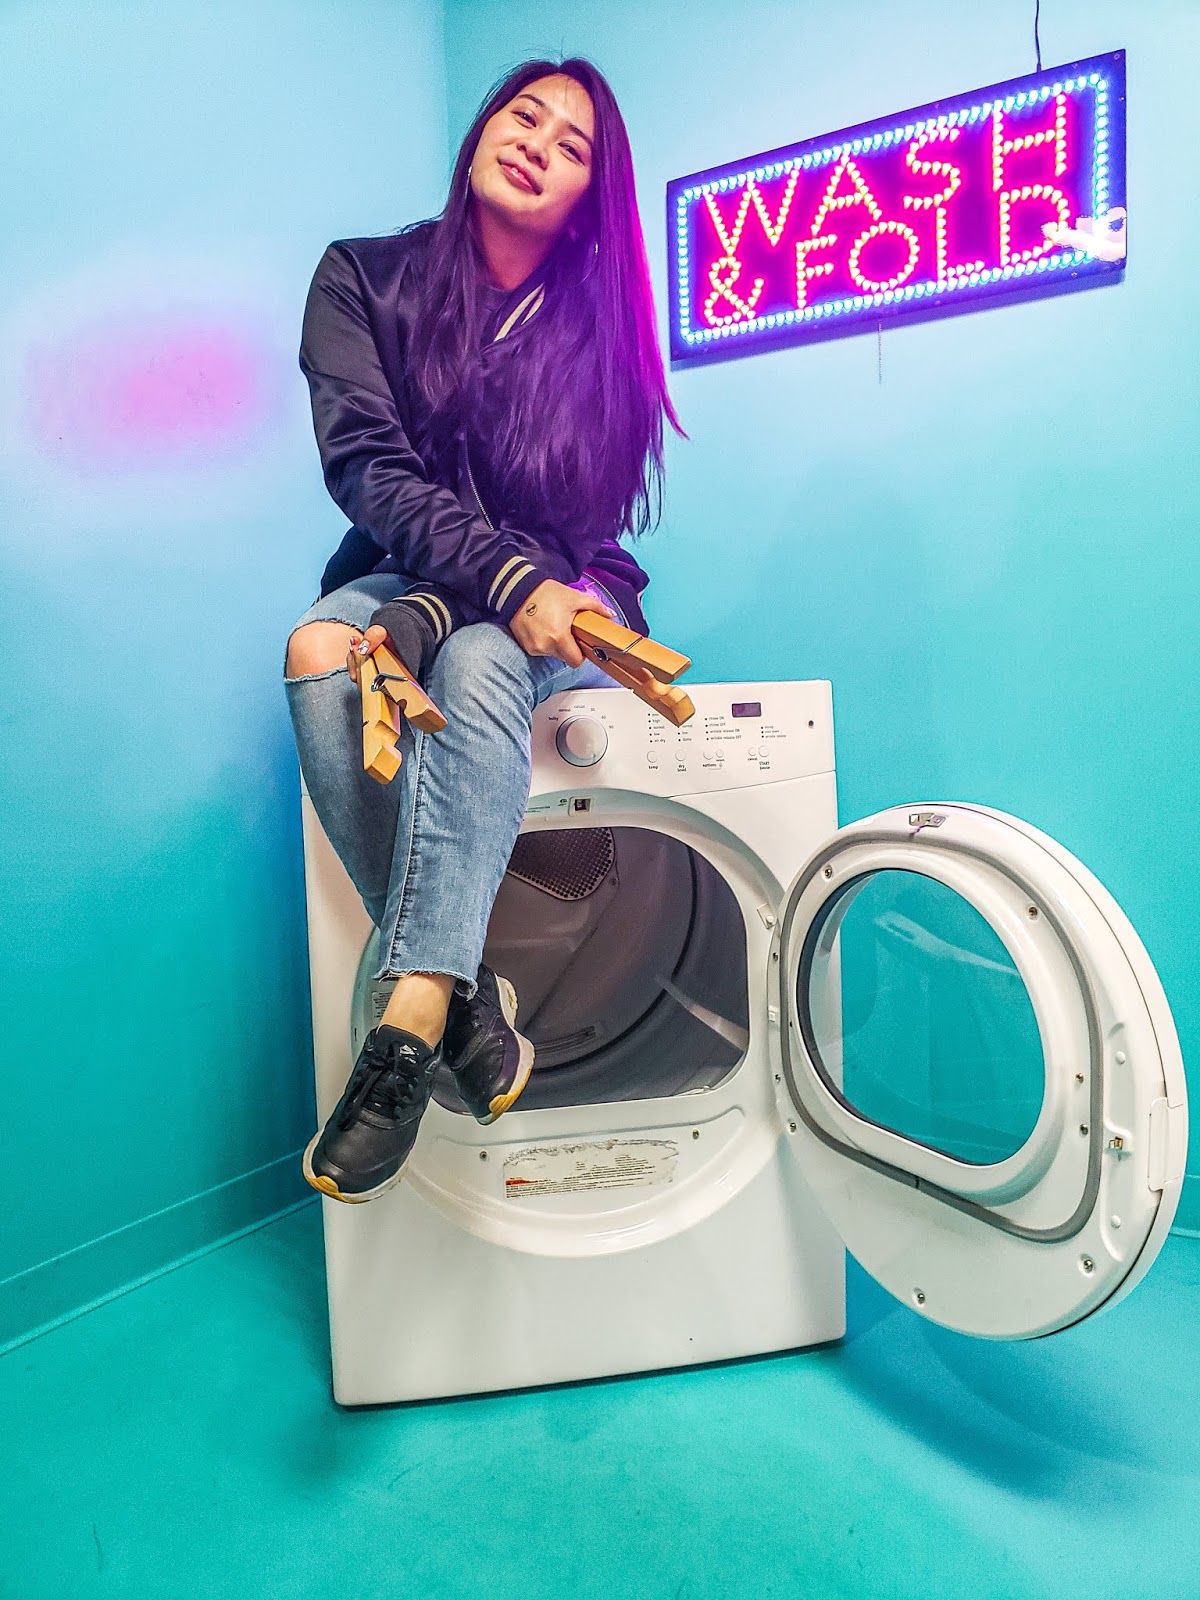 Seattle Selfie Museum in pike place market washing machine